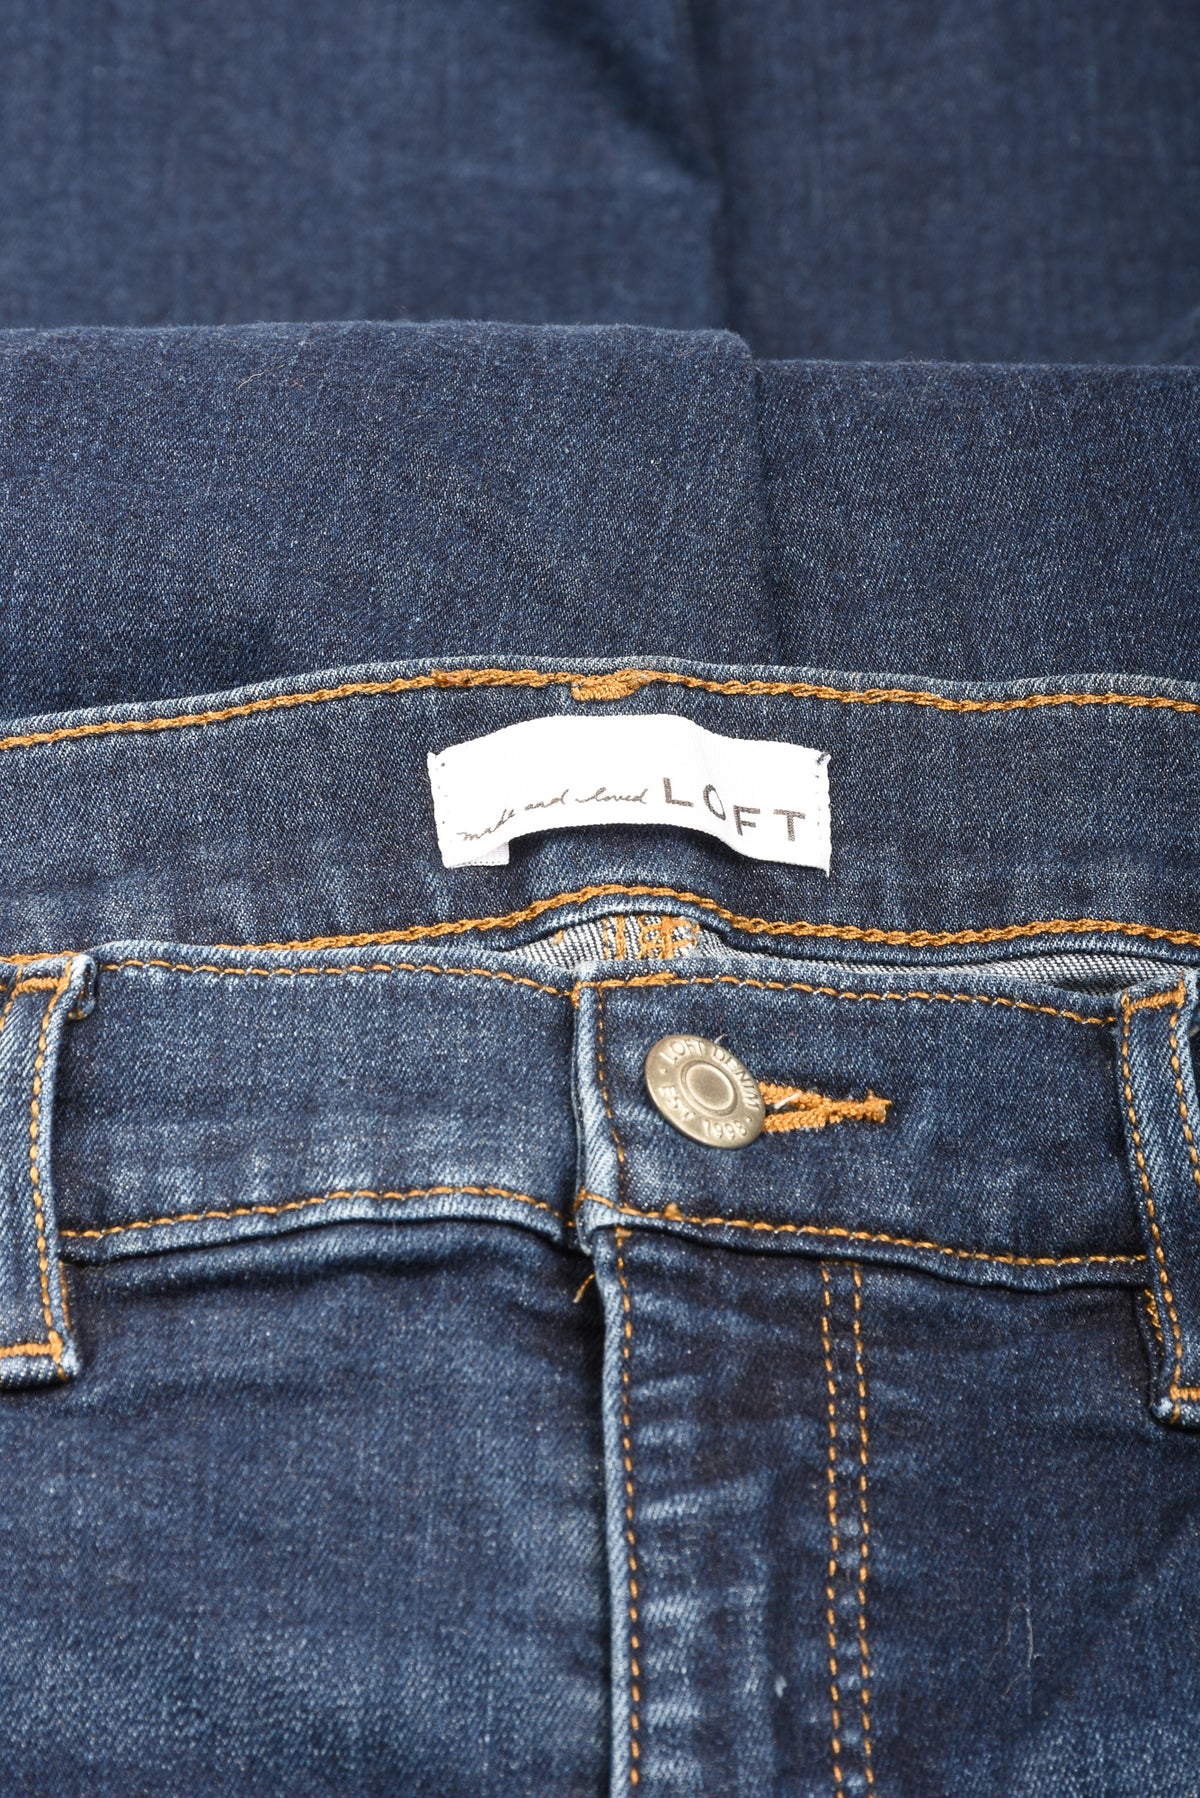 Loft Size 32/14 Women's Jeans - Your Designer Thrift